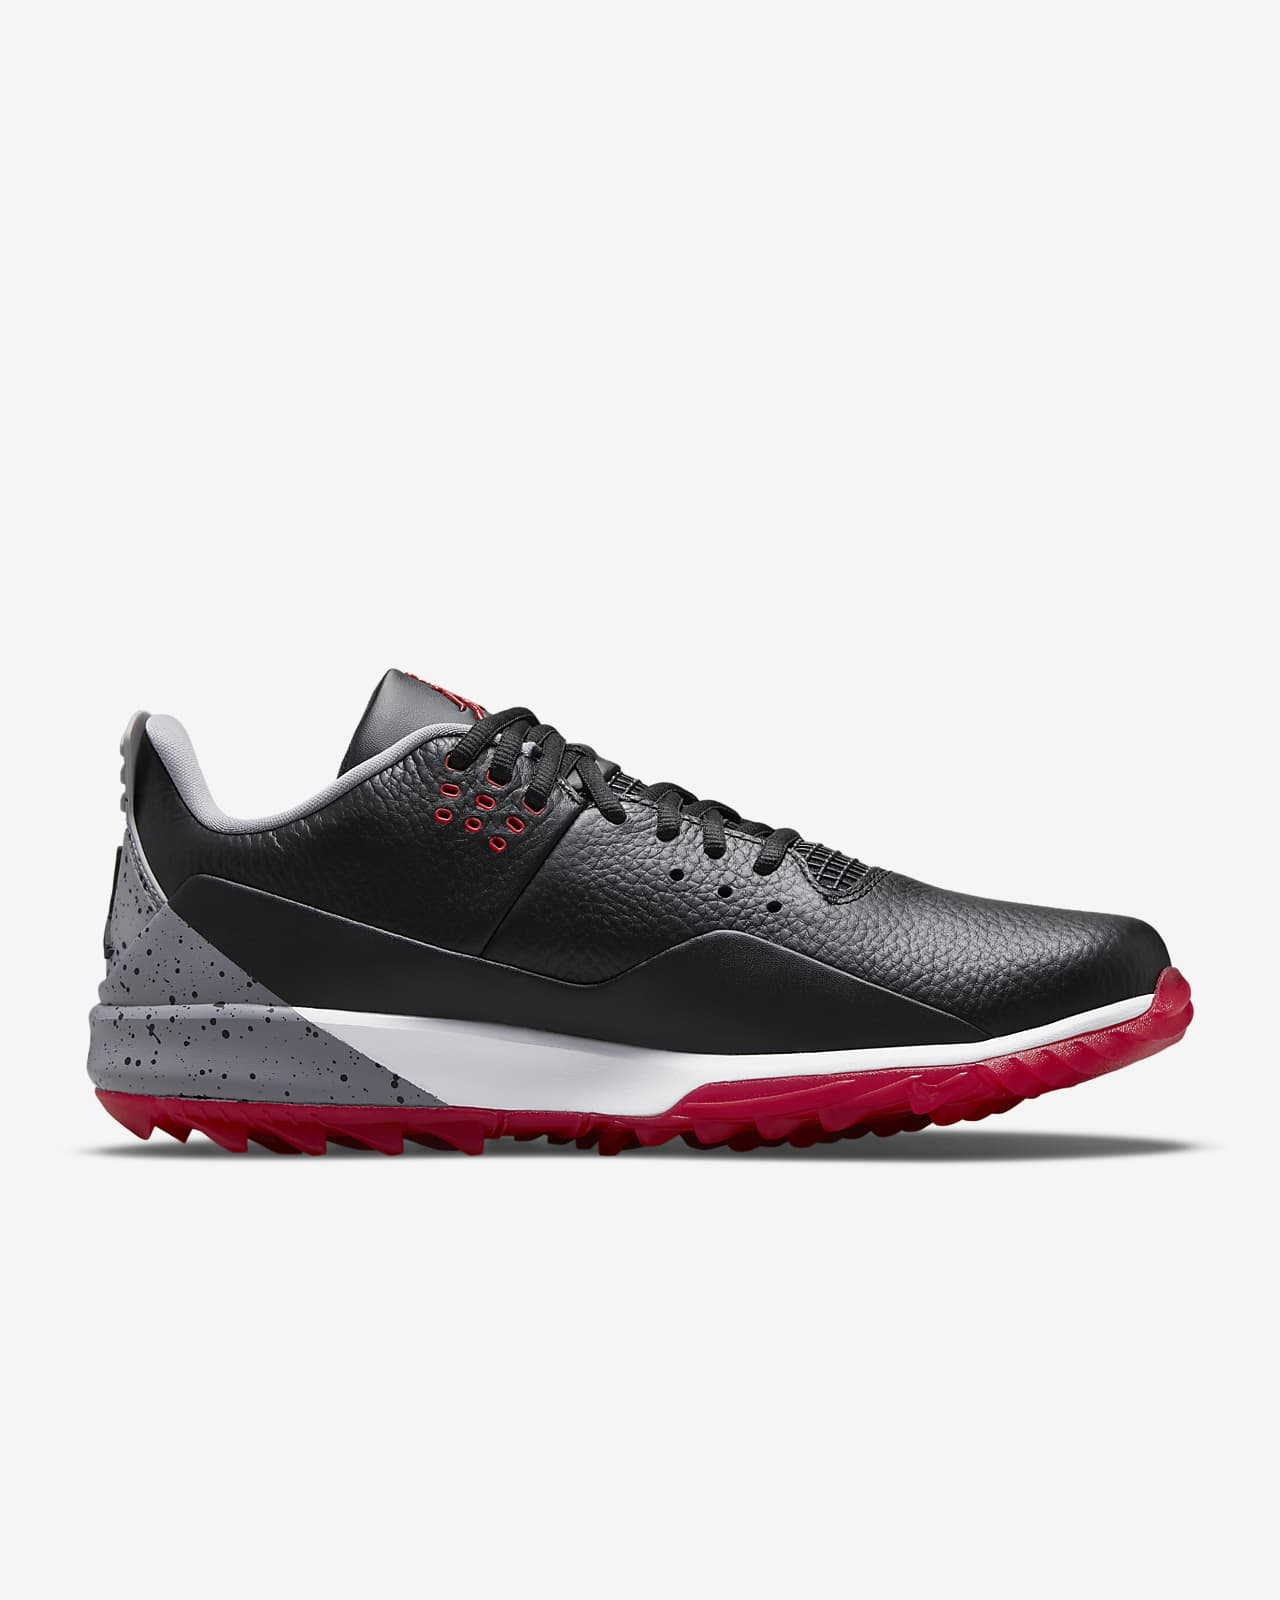 Jordan Men's ADG 3 Golf Shoes, Black